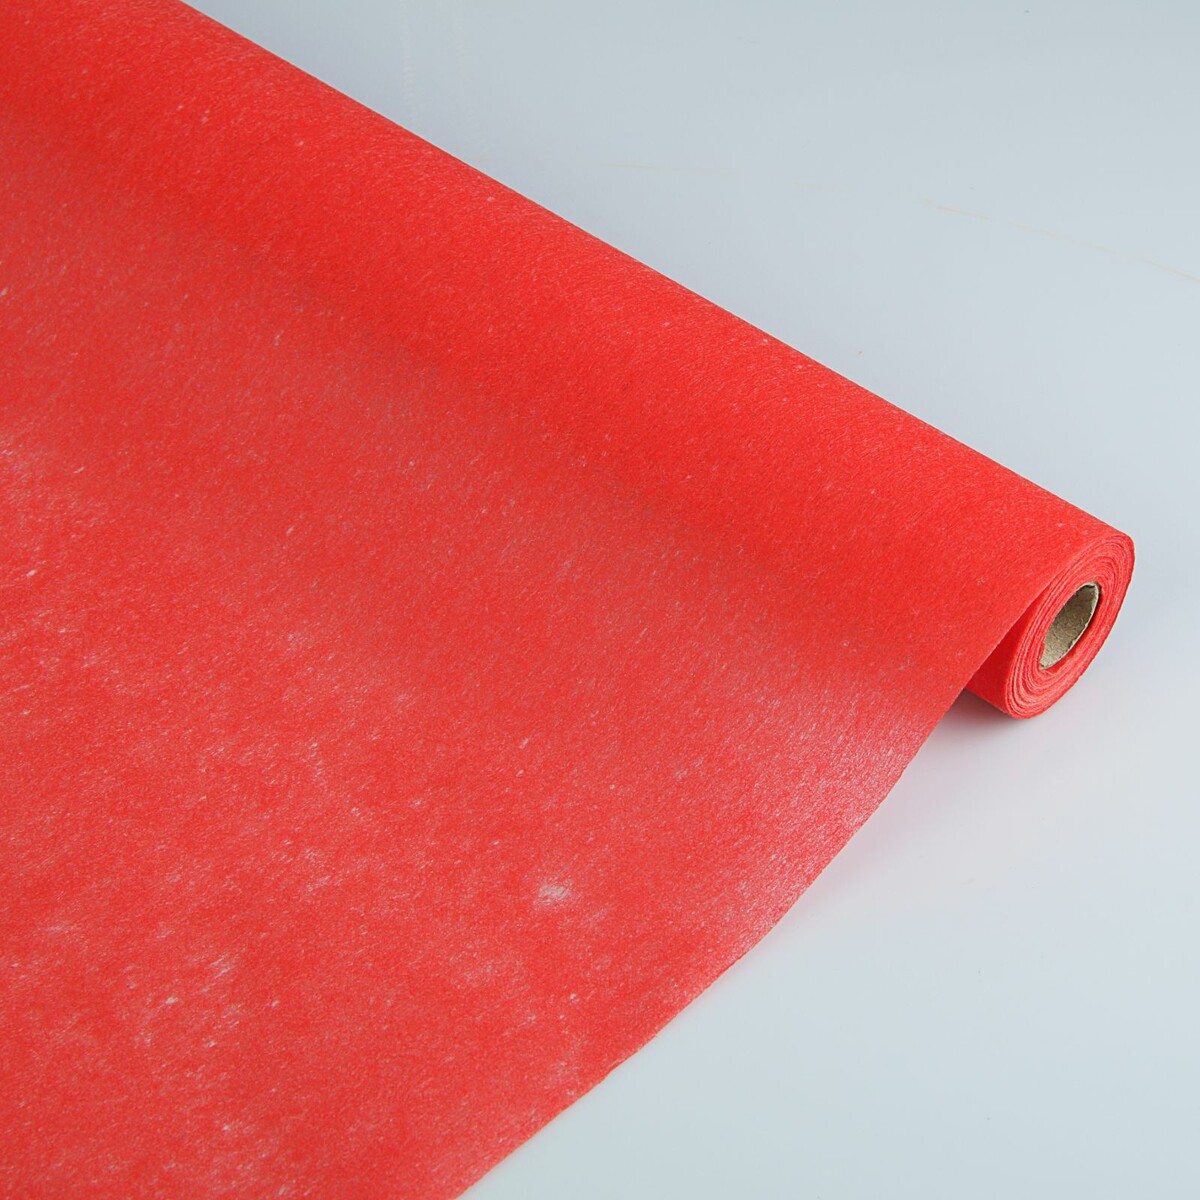 Фетр для упаковок и поделок, однотонный, красный, двусторонний, рулон 1шт., 50 см x 15 м фетр для упаковок и поделок однотонный ярко розовый однотонный двусторонний рулон 1шт 50 см x 15 м